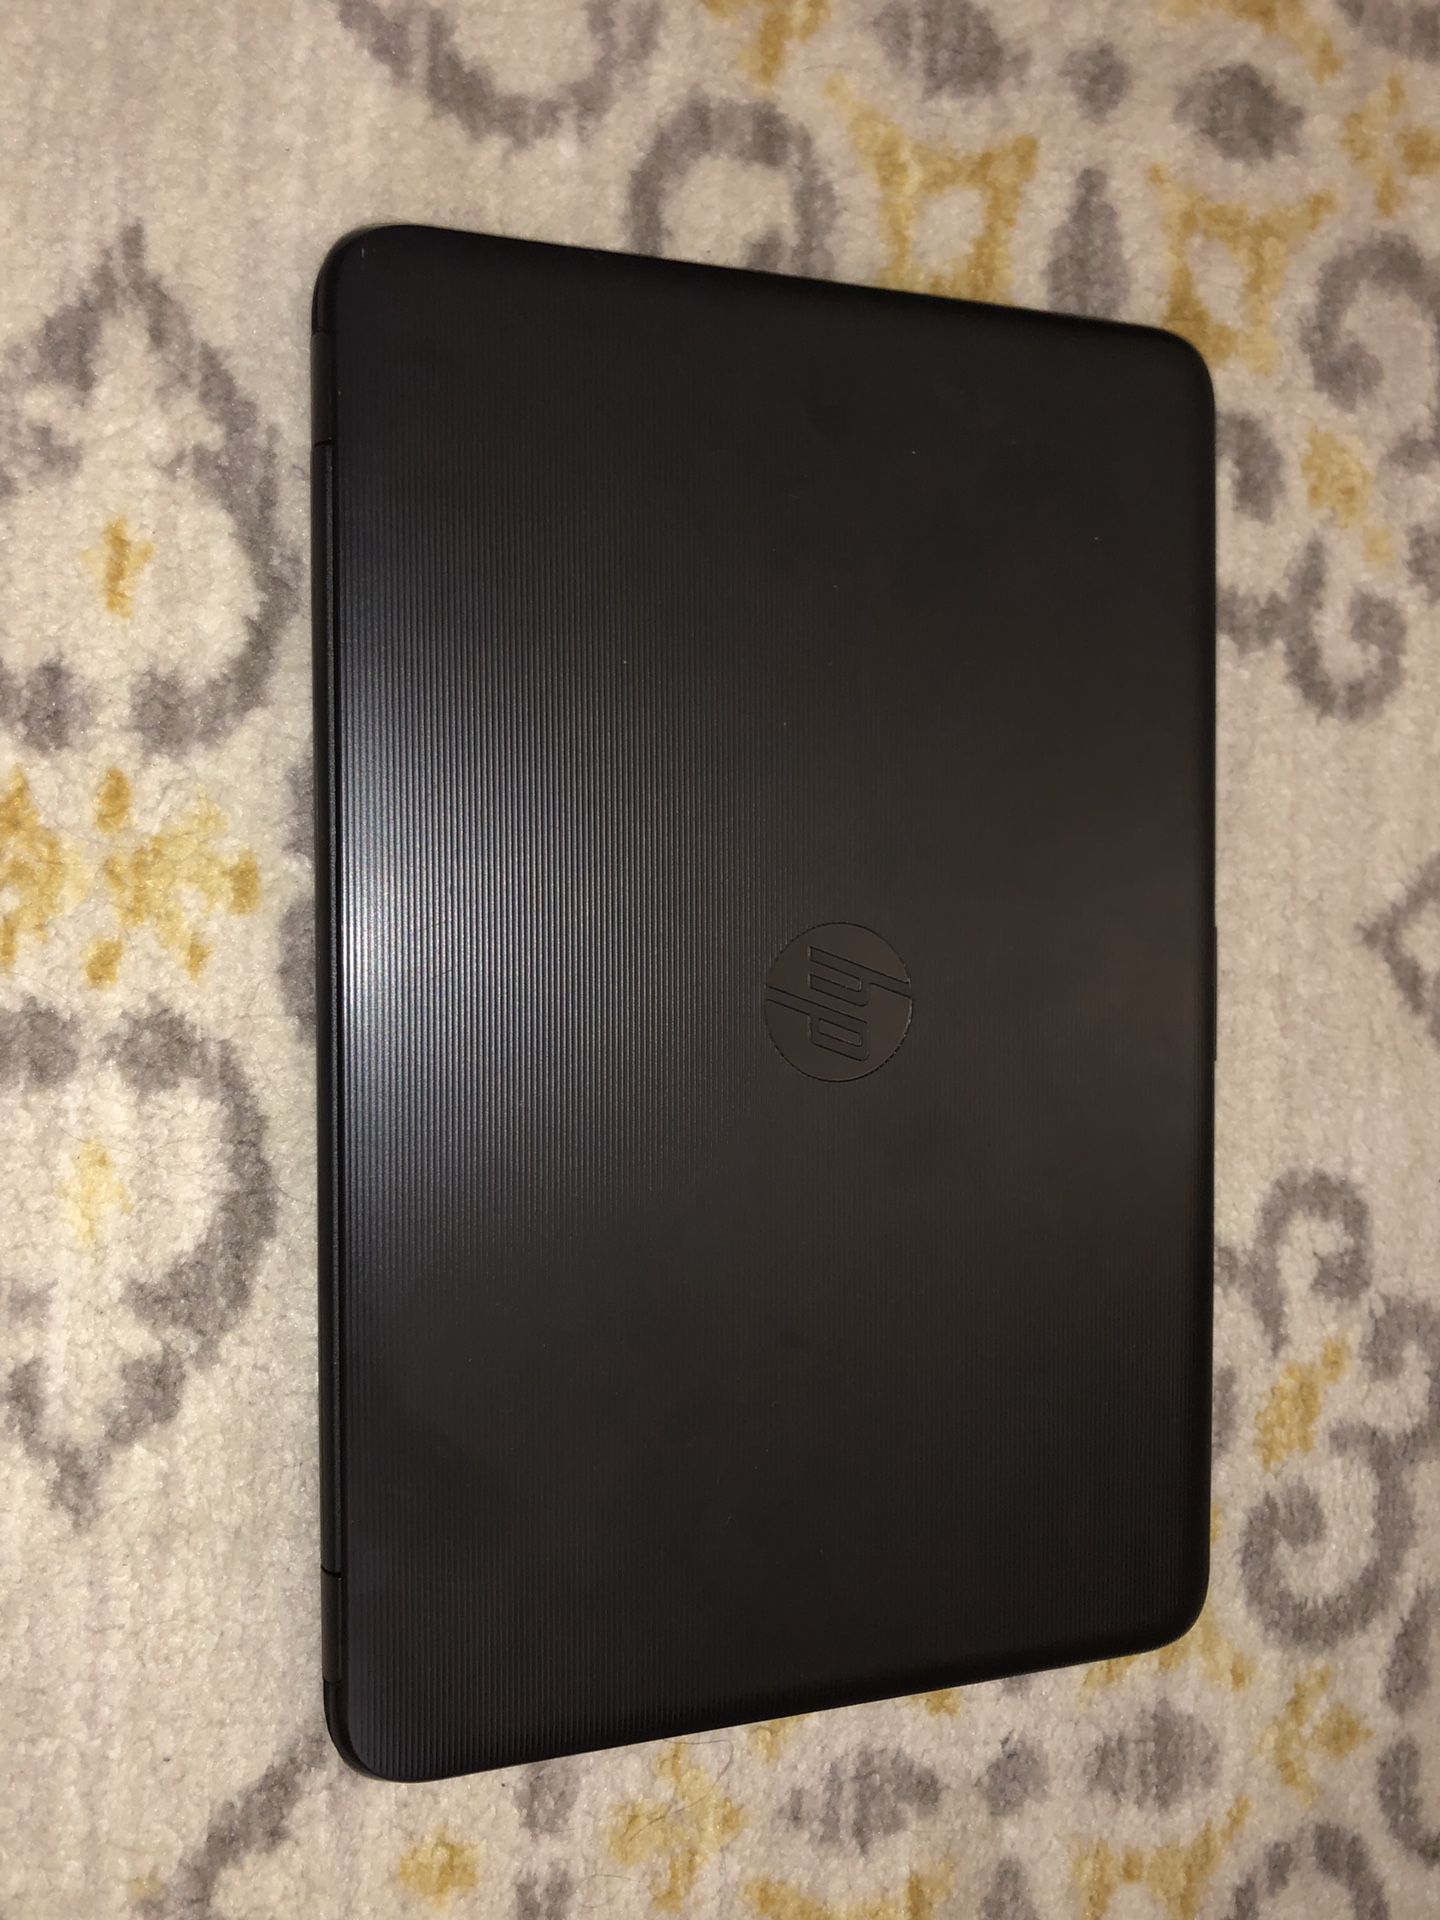 15 inch HP laptop